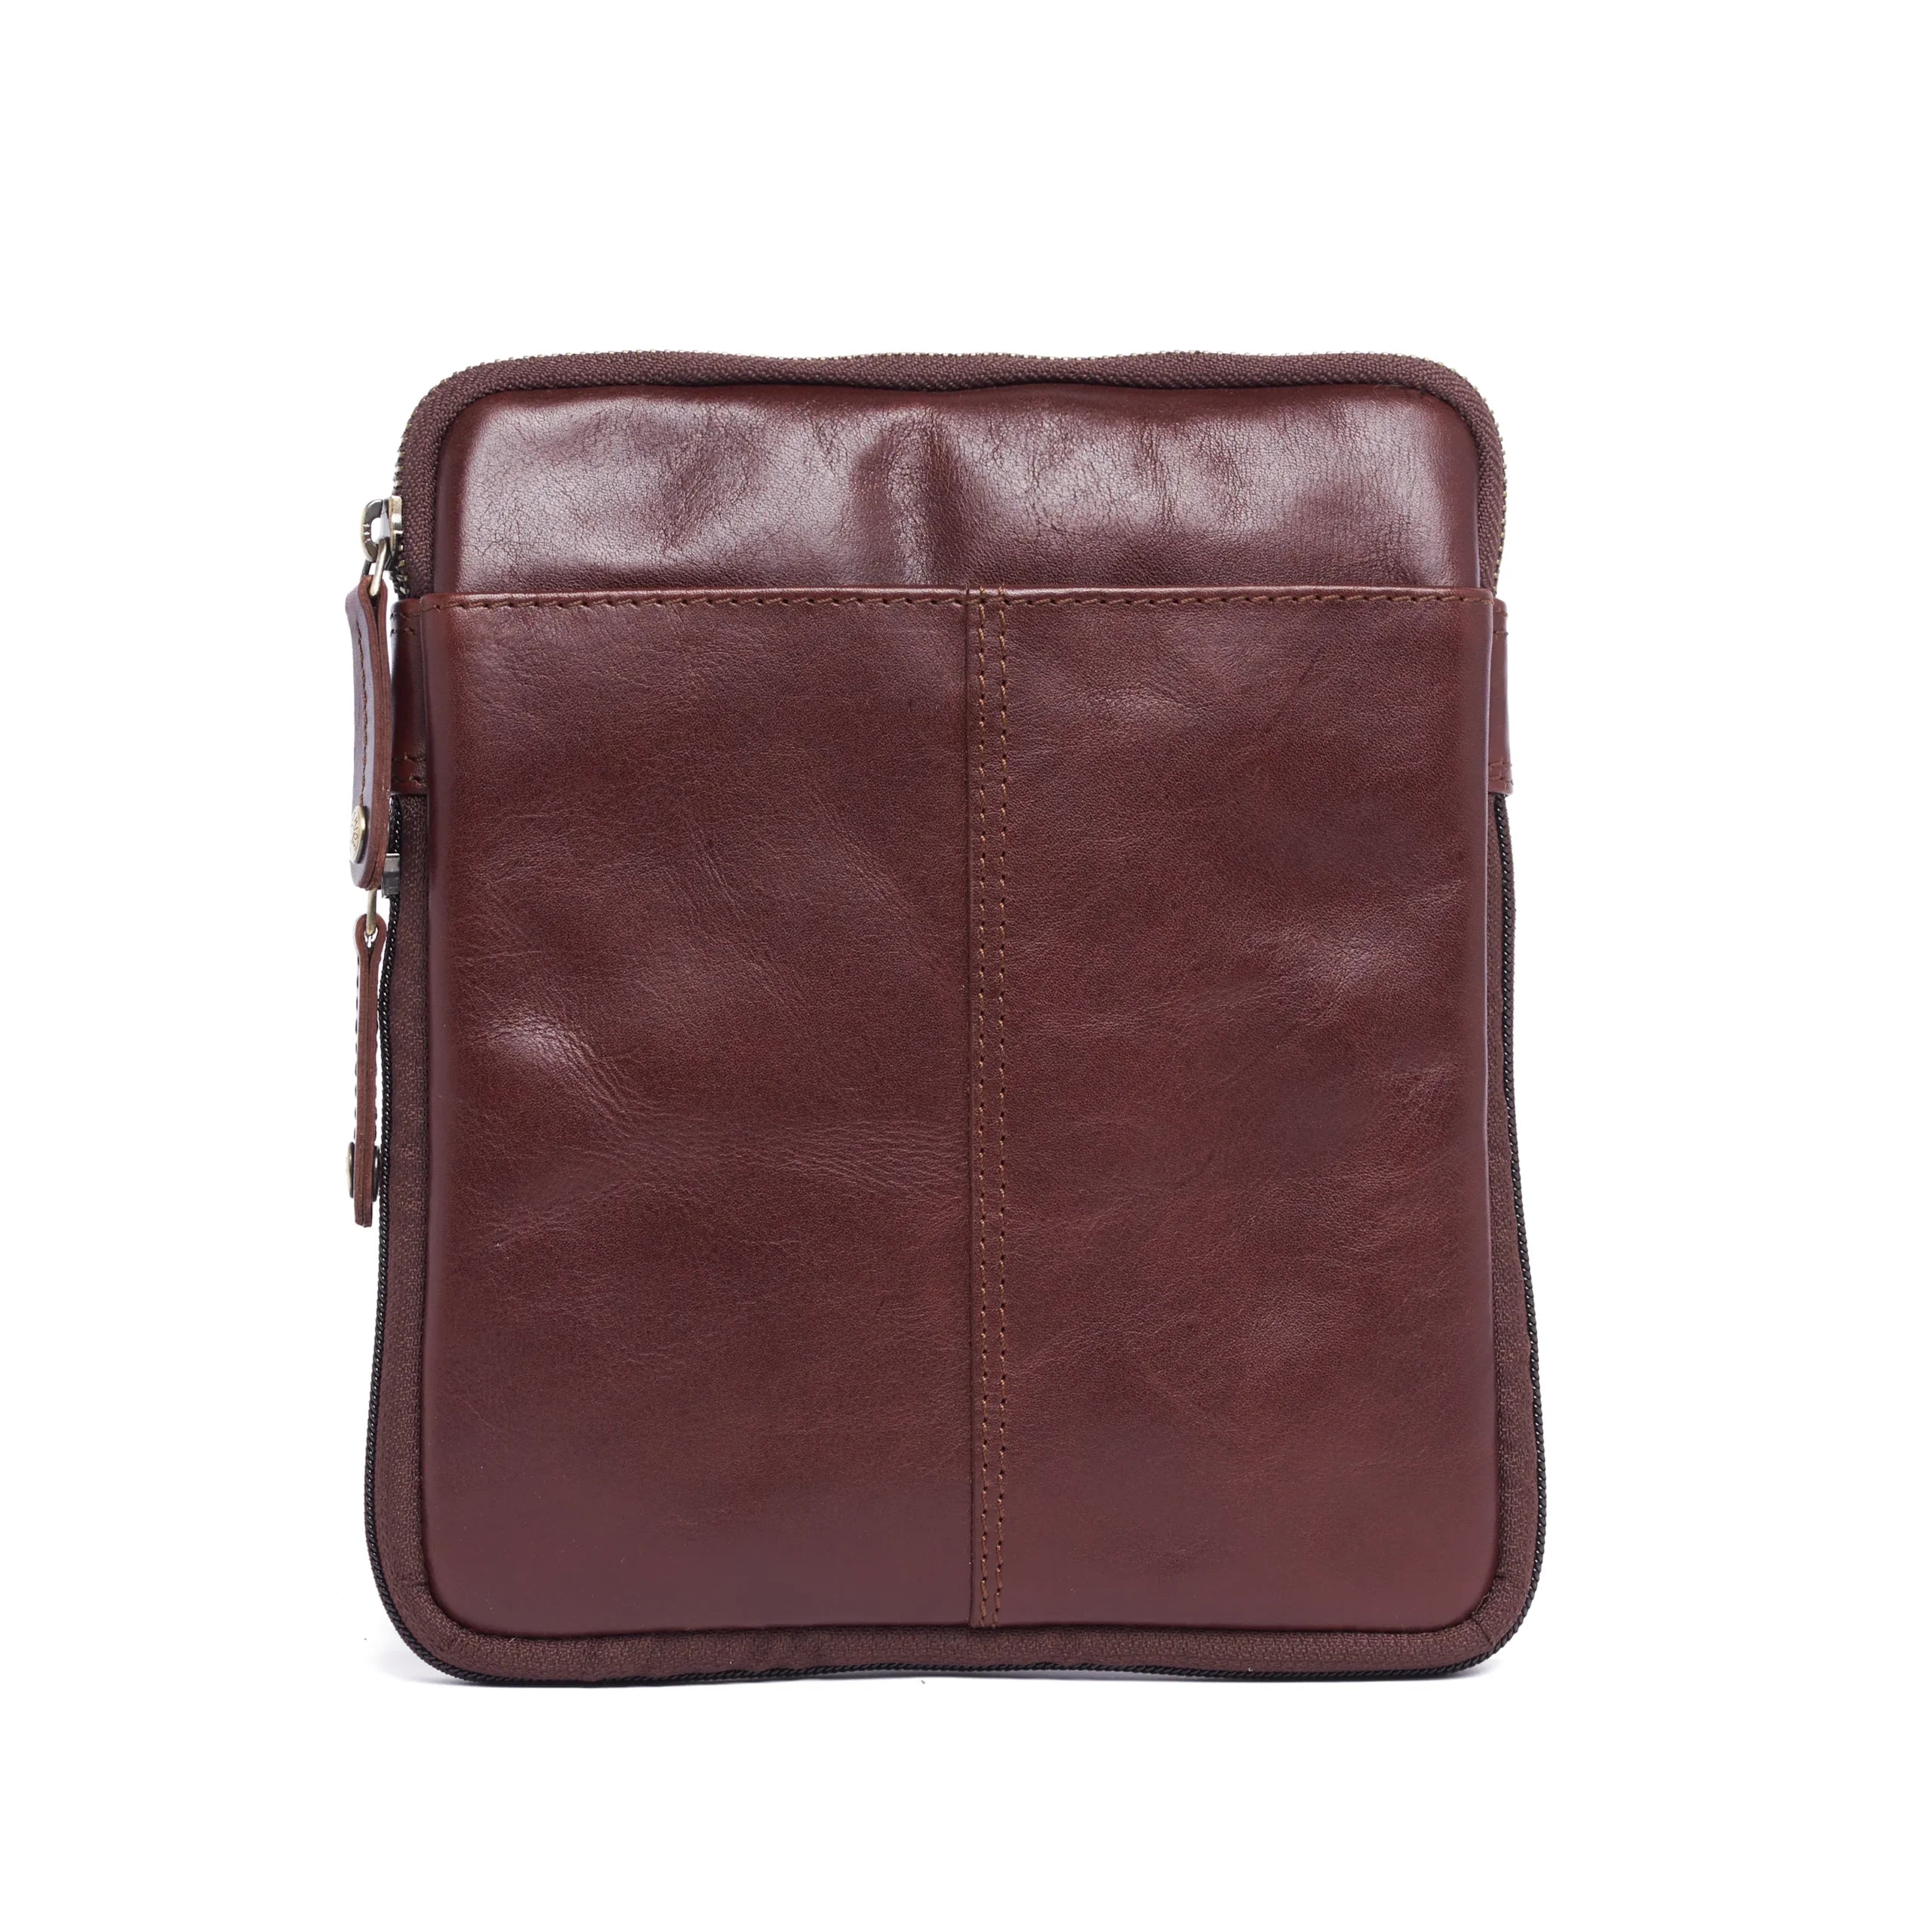 Oran - RH-2365 Cross body leather side bag - Brandy-1